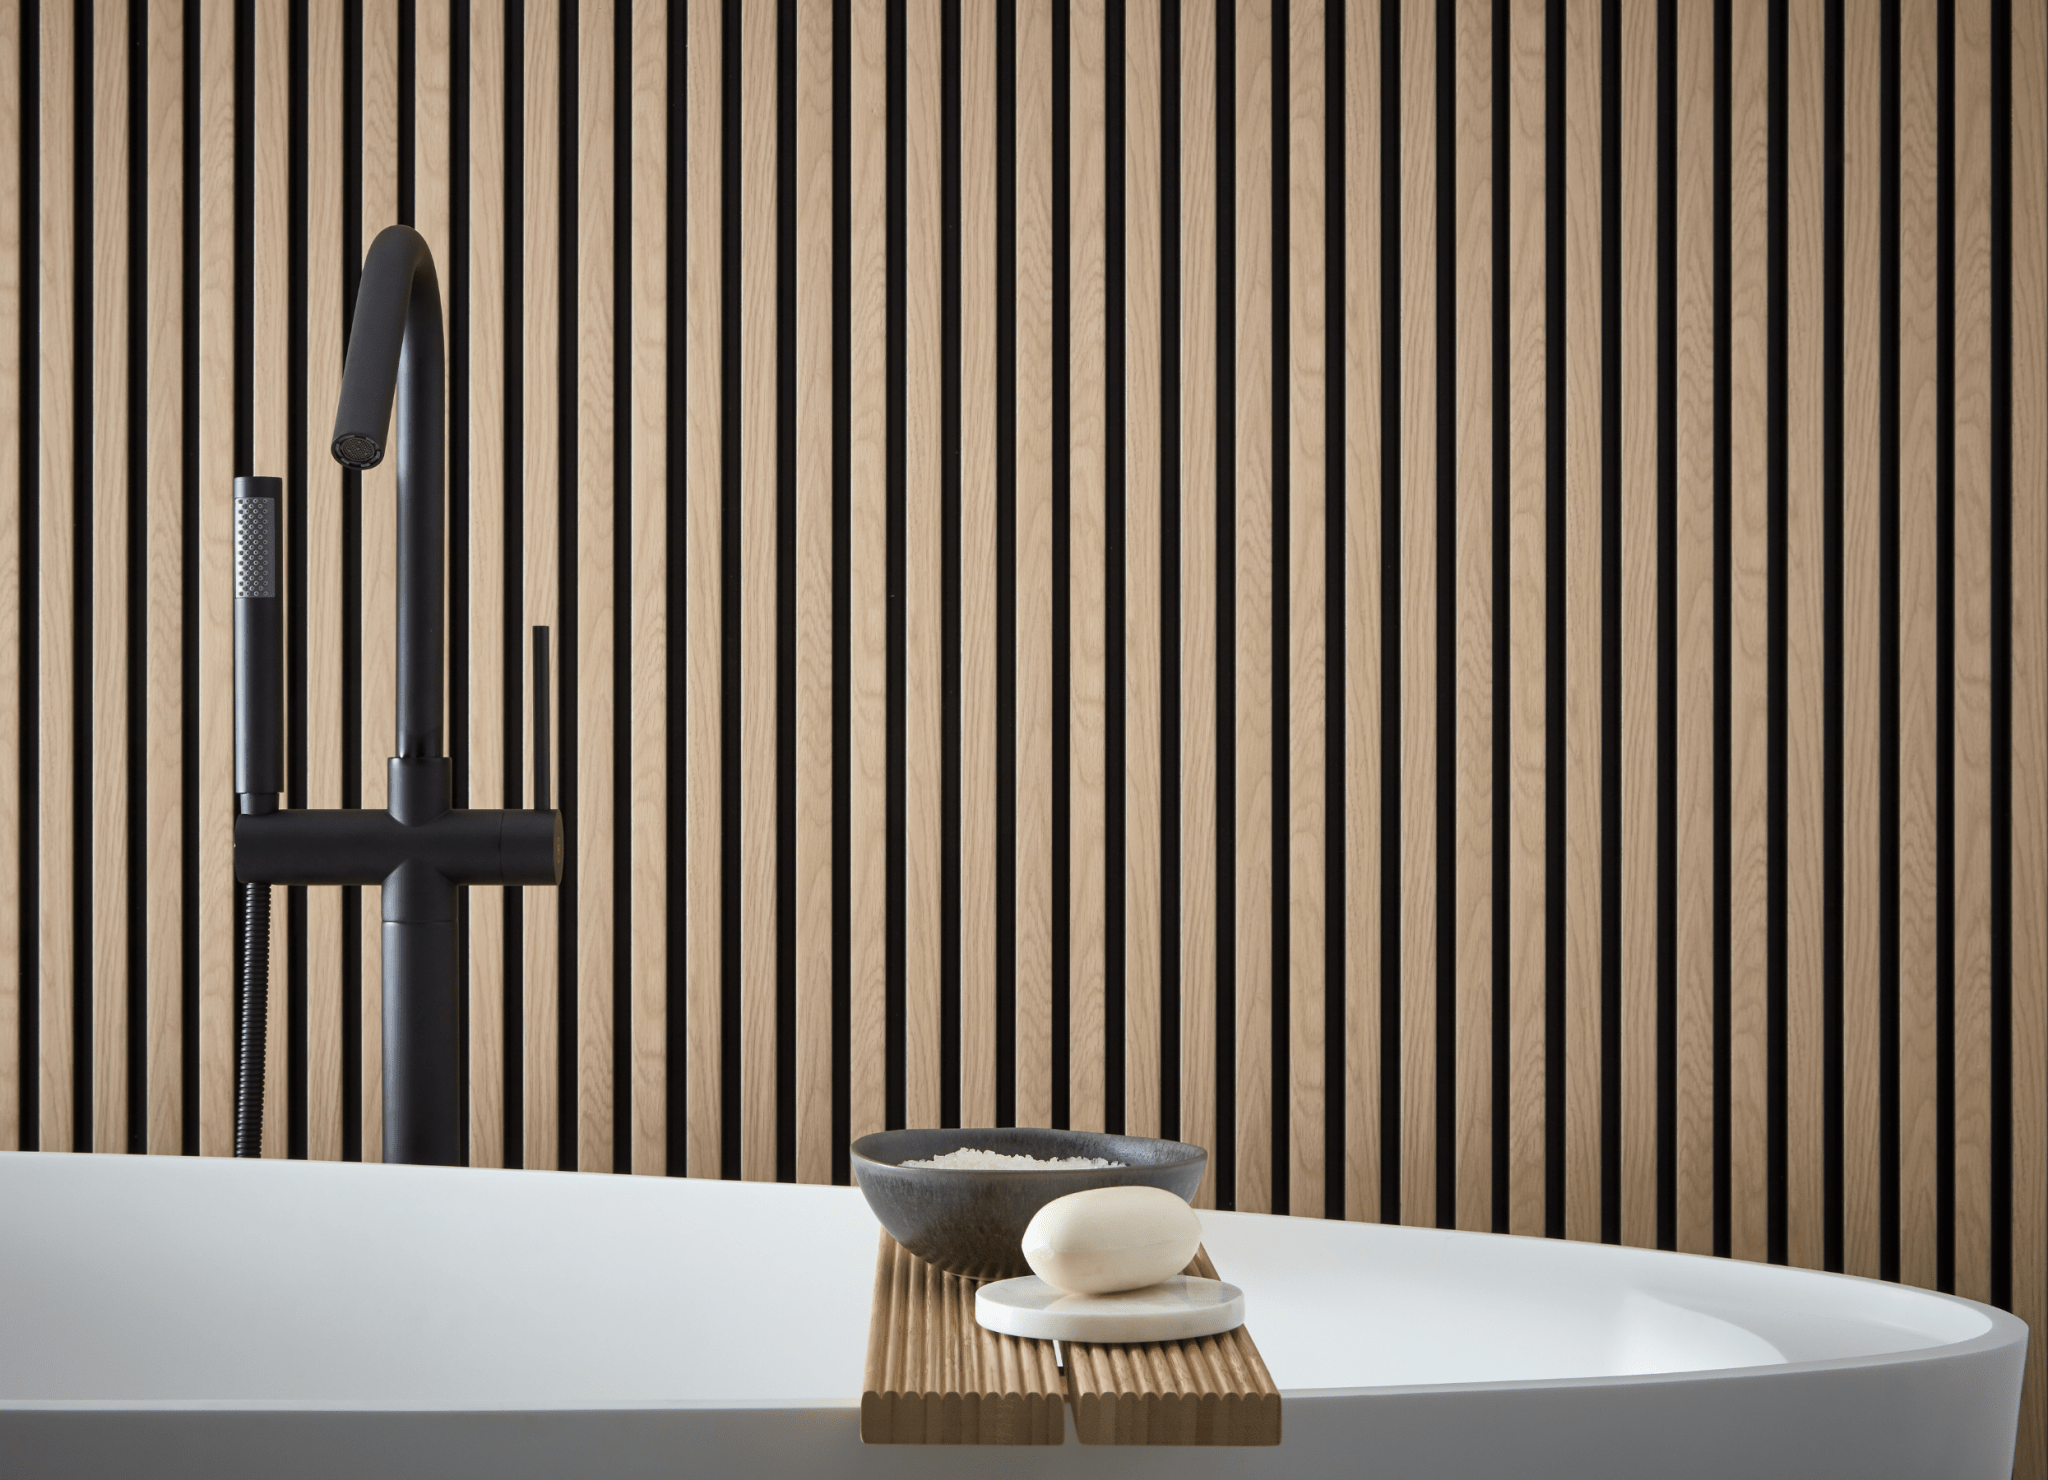 Bathroom interior design featuring SlatWall Waterproof Natural oak and Black behind a white bathtub.